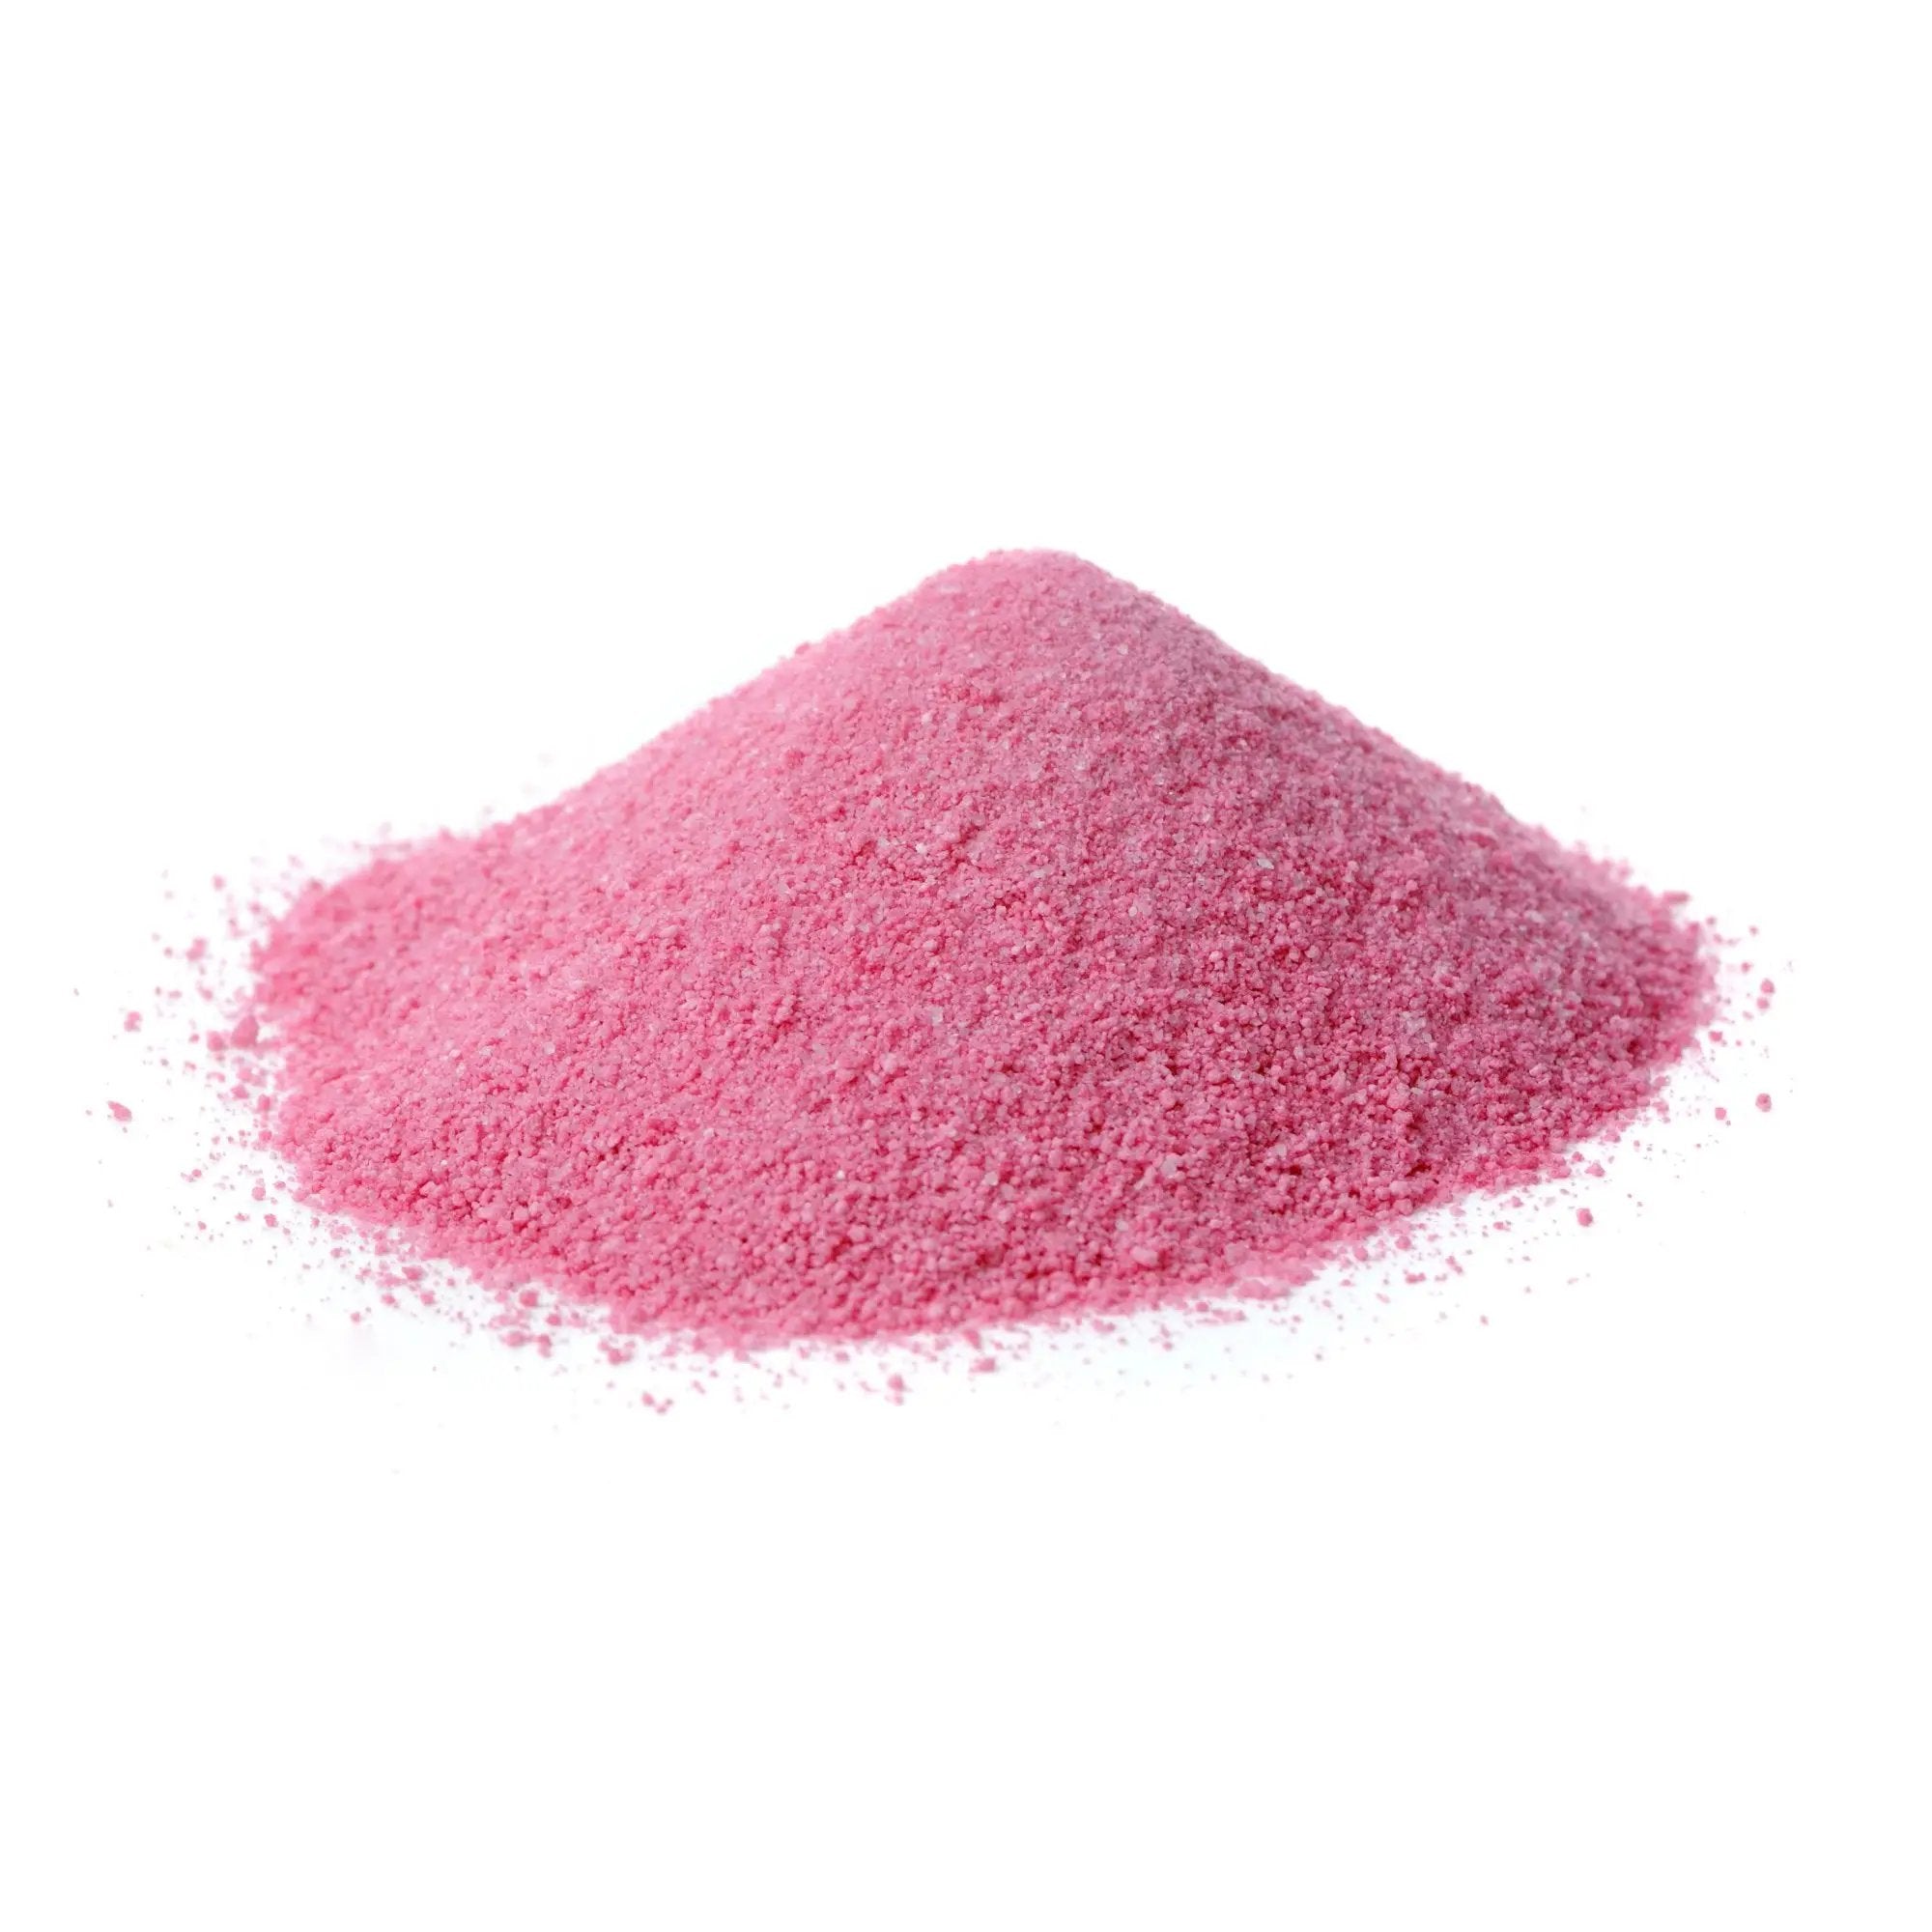 Cape Crystal Brands - Raspberry Powder - 100% organic - bright red powder - nutritional powerhouse